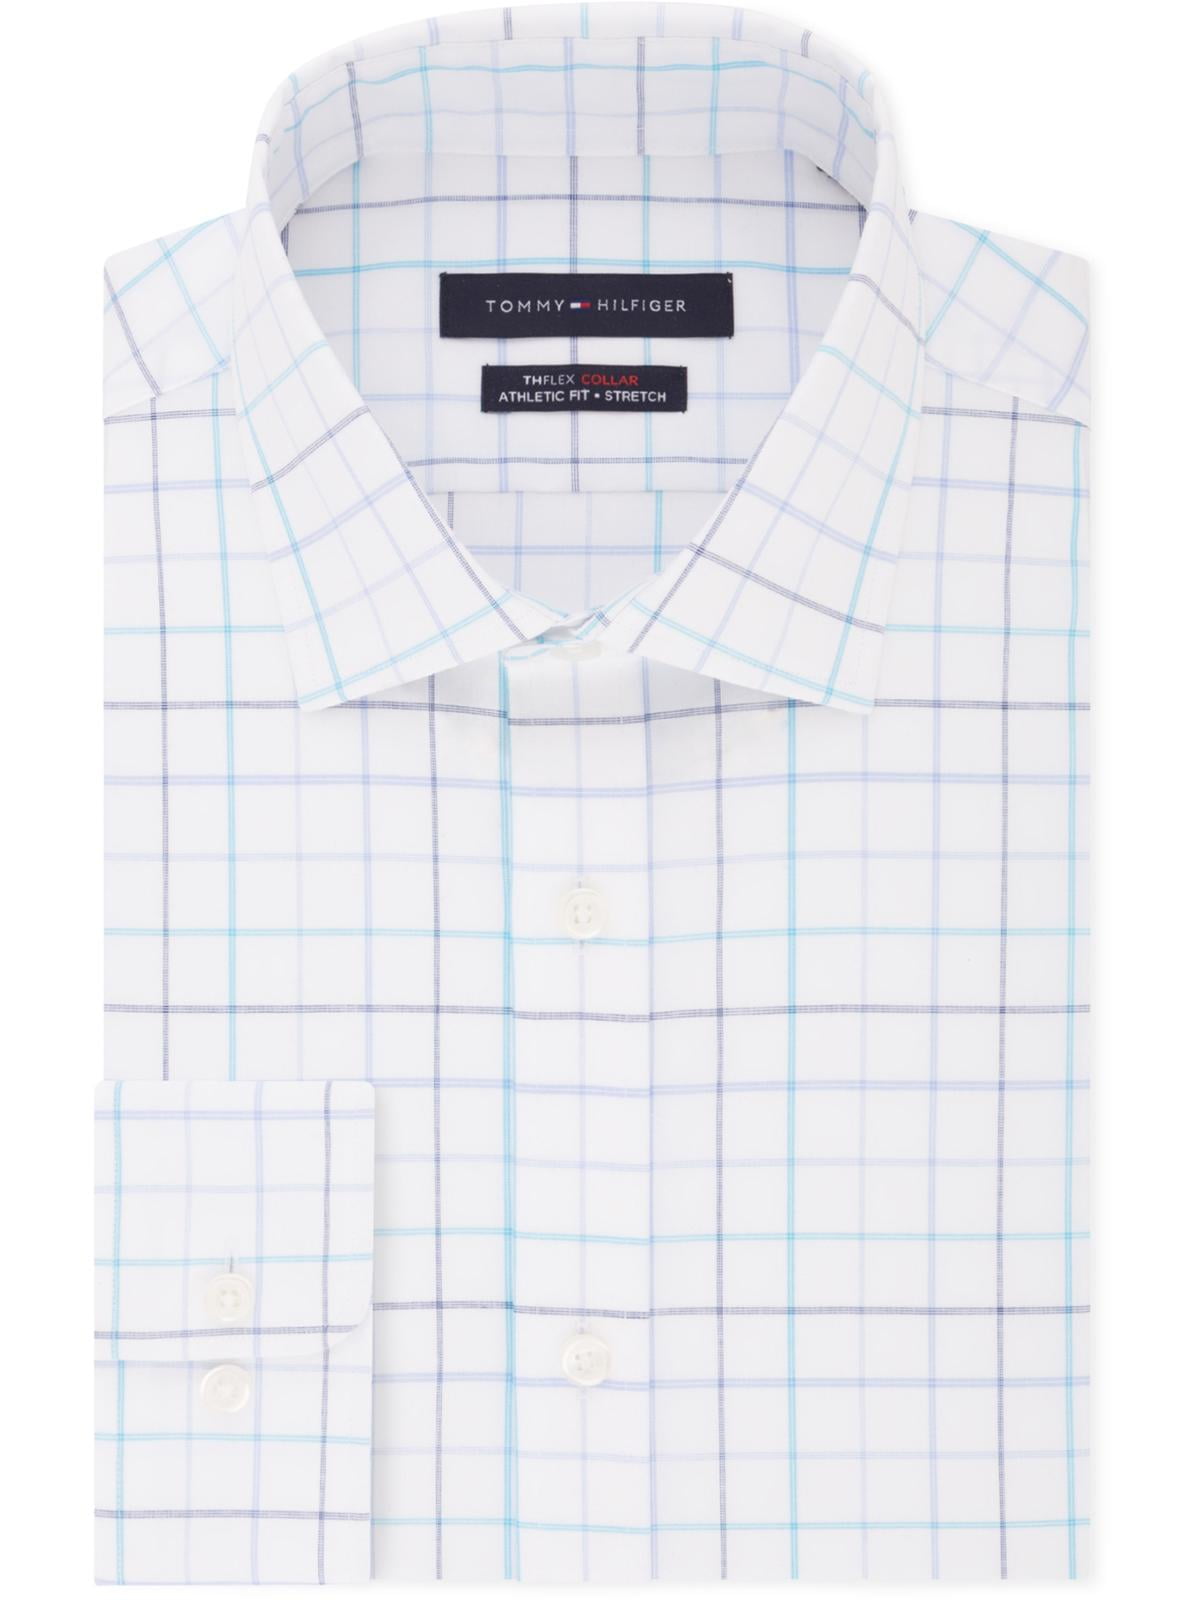 Tommy Hilfiger Mens Regular Fit Multi Window Pane Check Dress Shirt